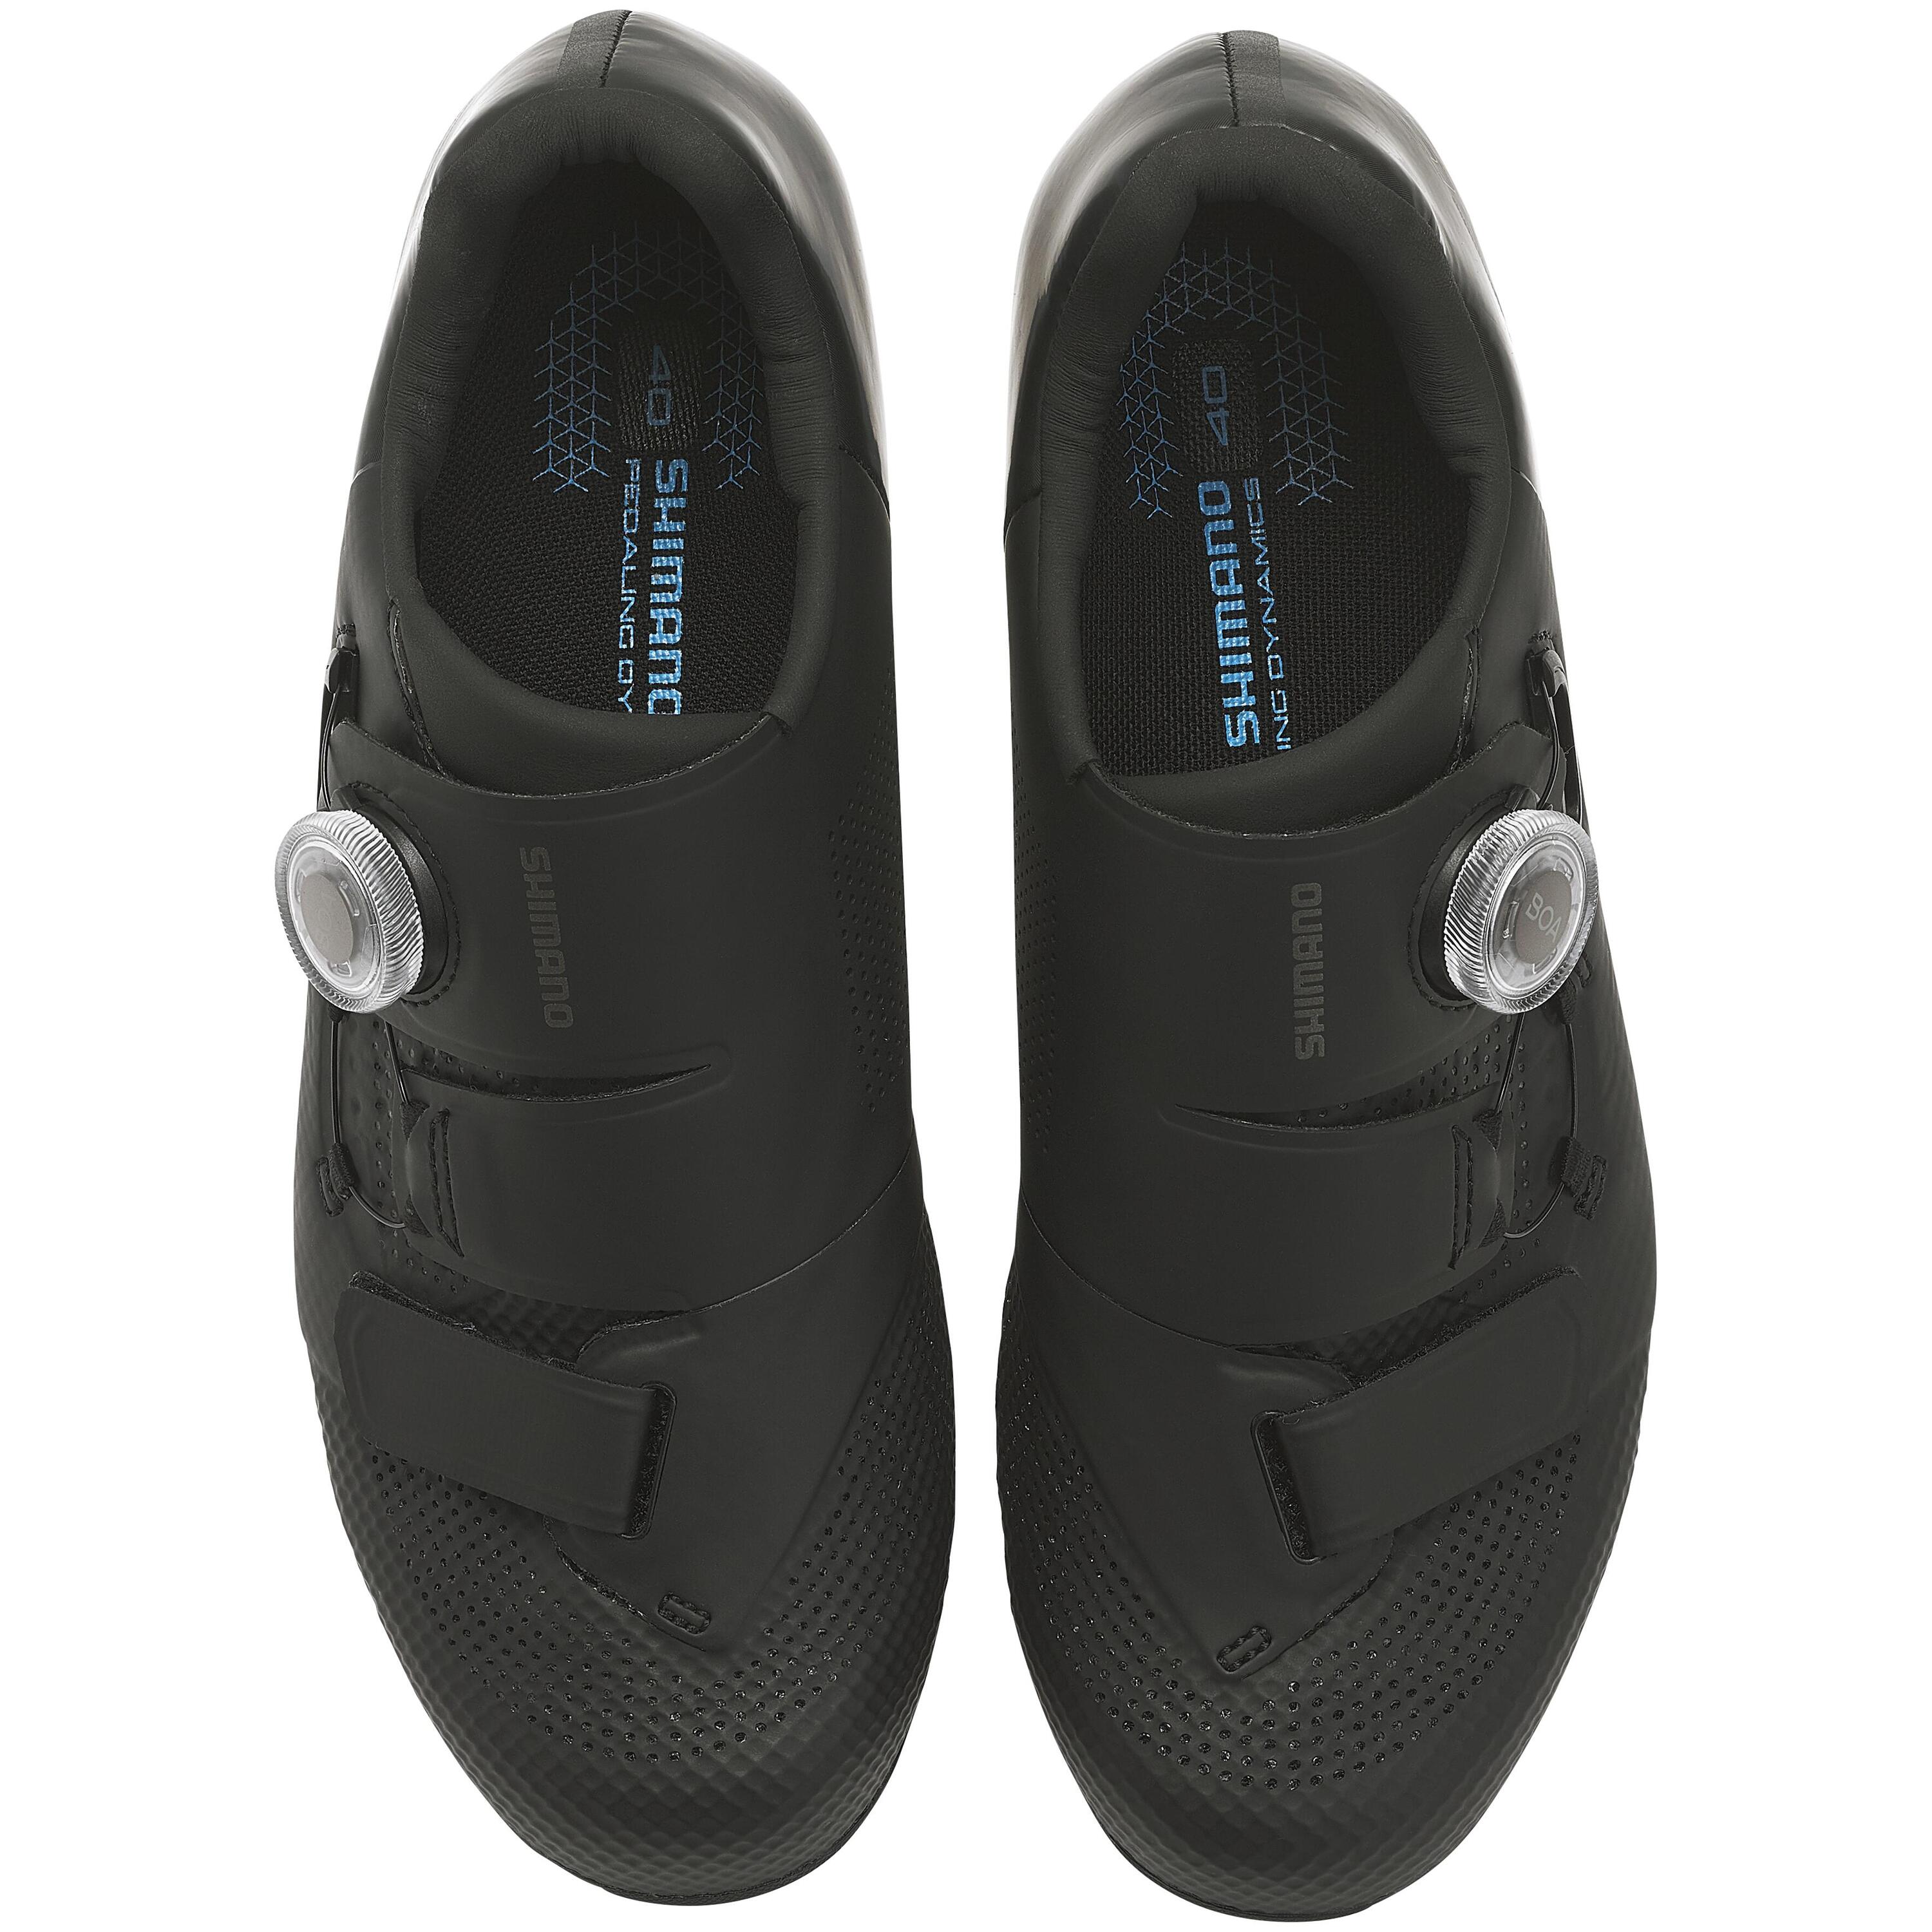 Road Cycling Shoes RC502 - Black 4/4